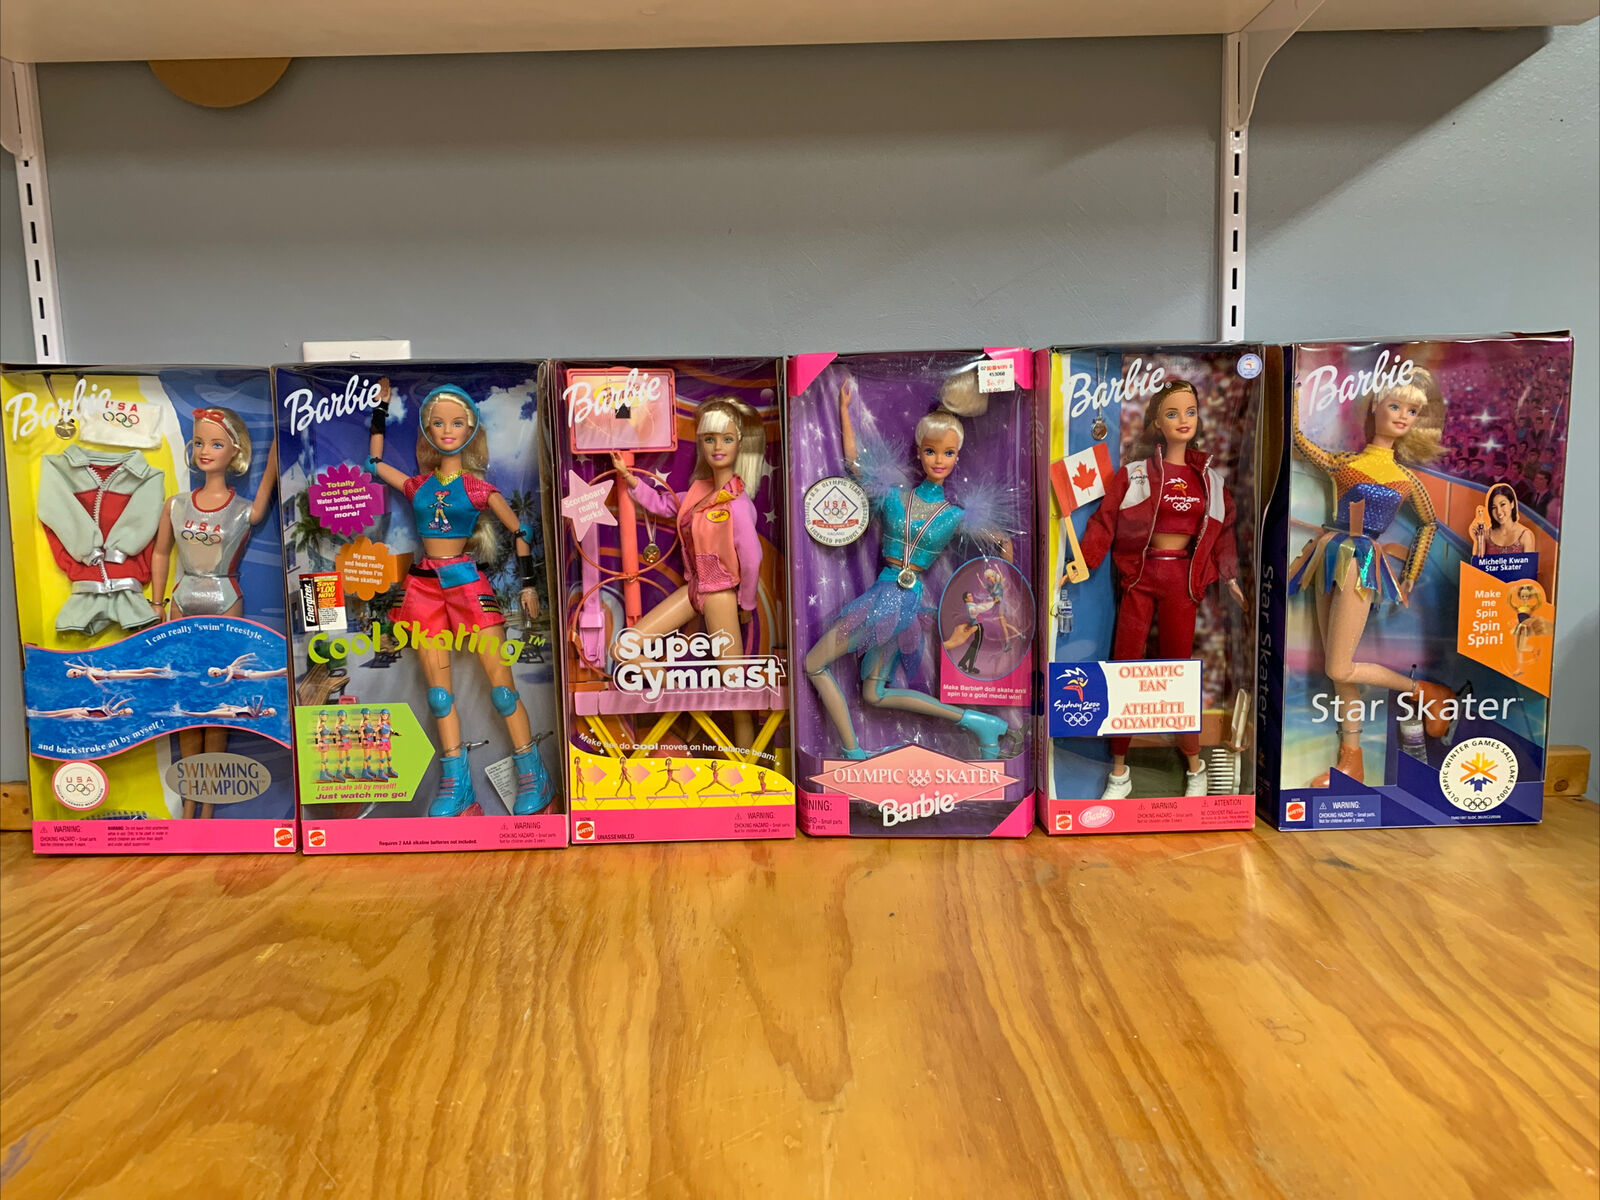 Lot Of 6 Nib Barbie Doll Olympic Skater, Gymnast, Swimming Star Skater Mattel